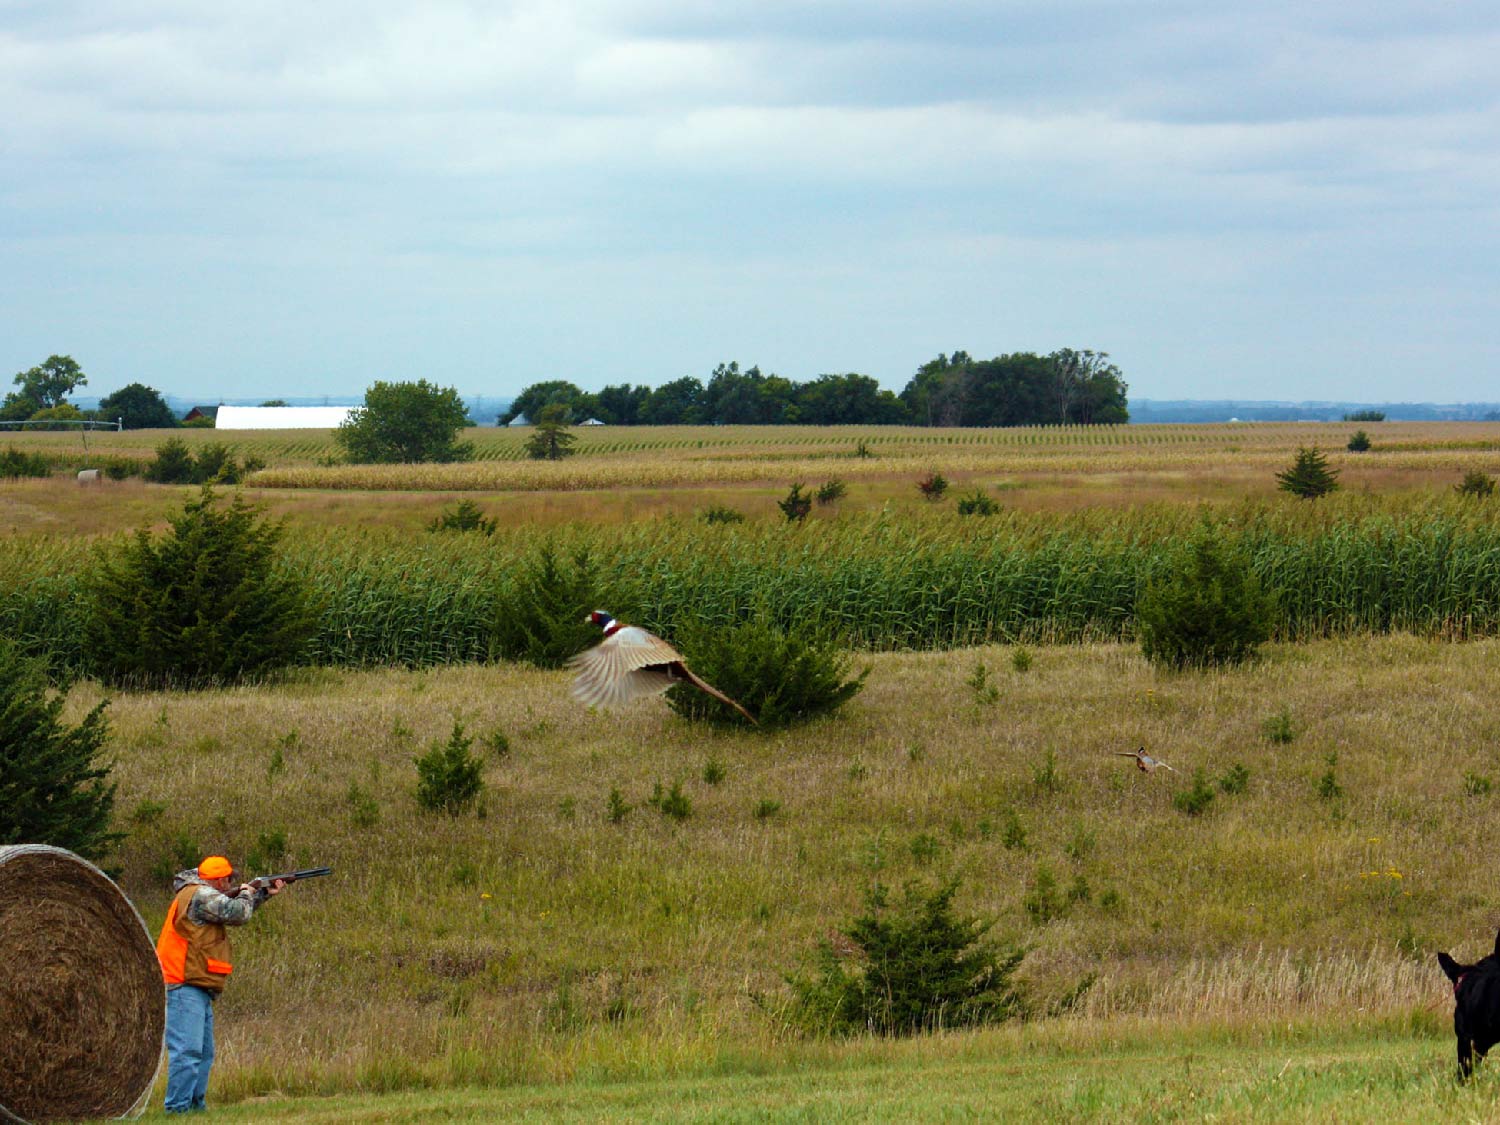 hunter aiming a shotgun in a field